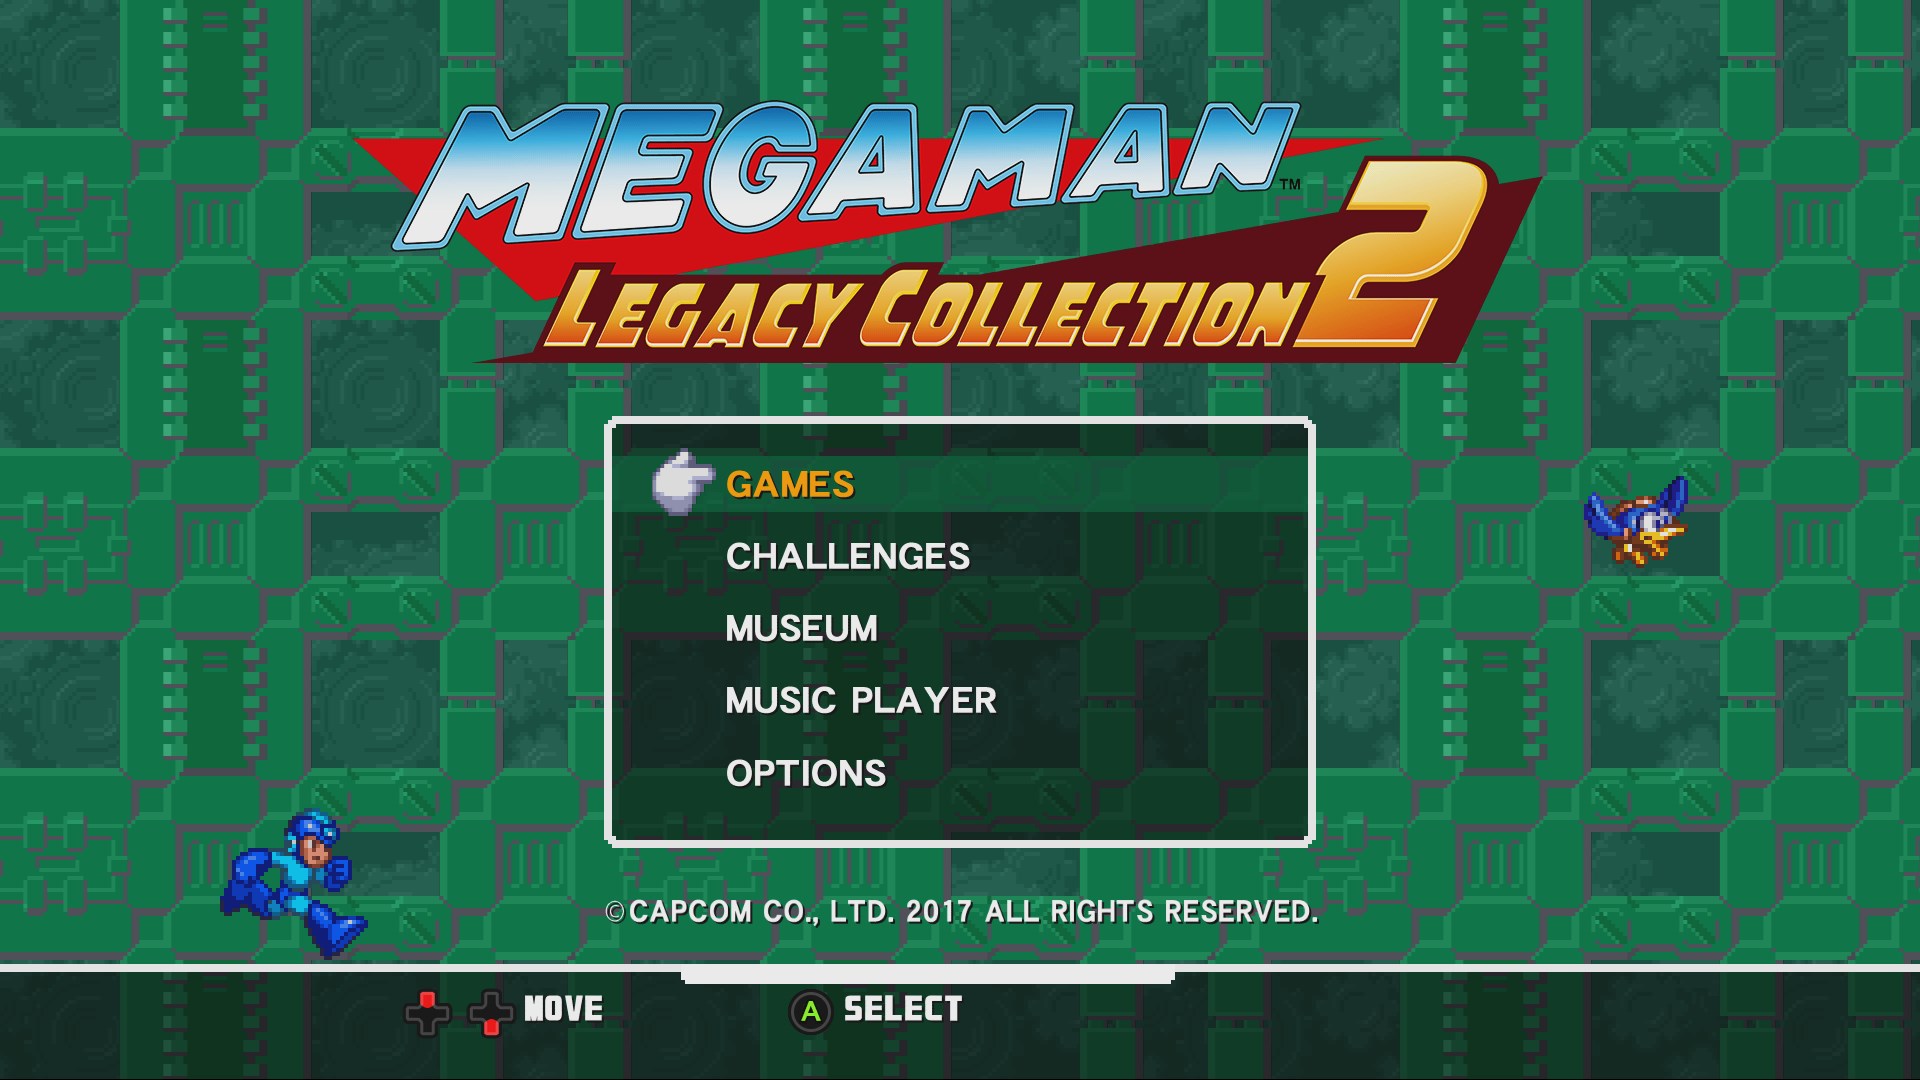 Megaman legacy collection. Mega man Legacy collection 1 & 2 Combo Pack. Mega man Legacy collection. Megaman Legacy collection 2.